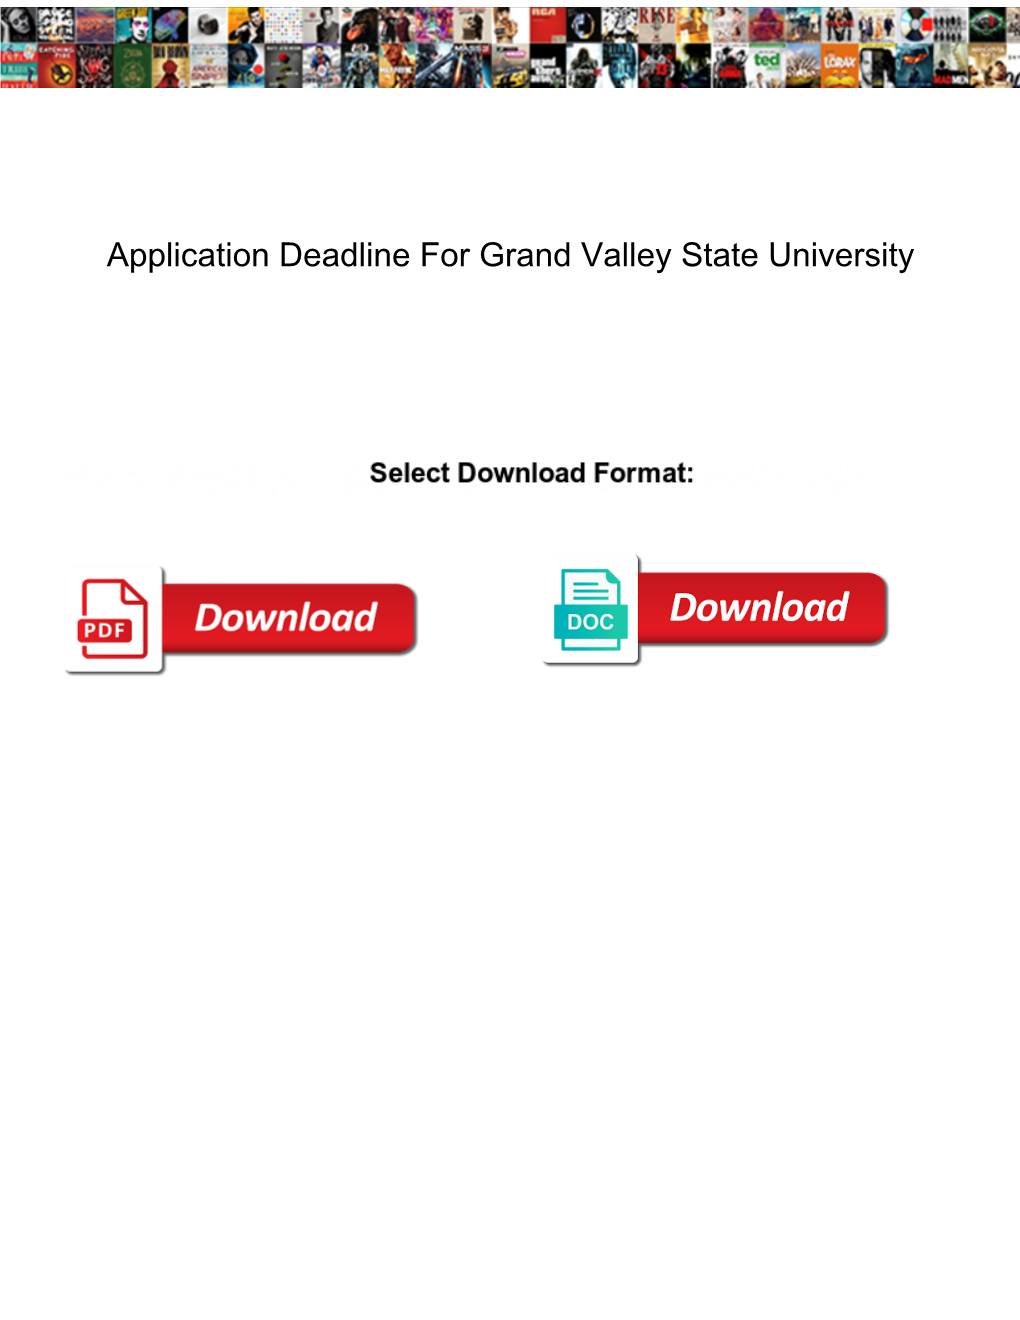 Application Deadline for Grand Valley State University